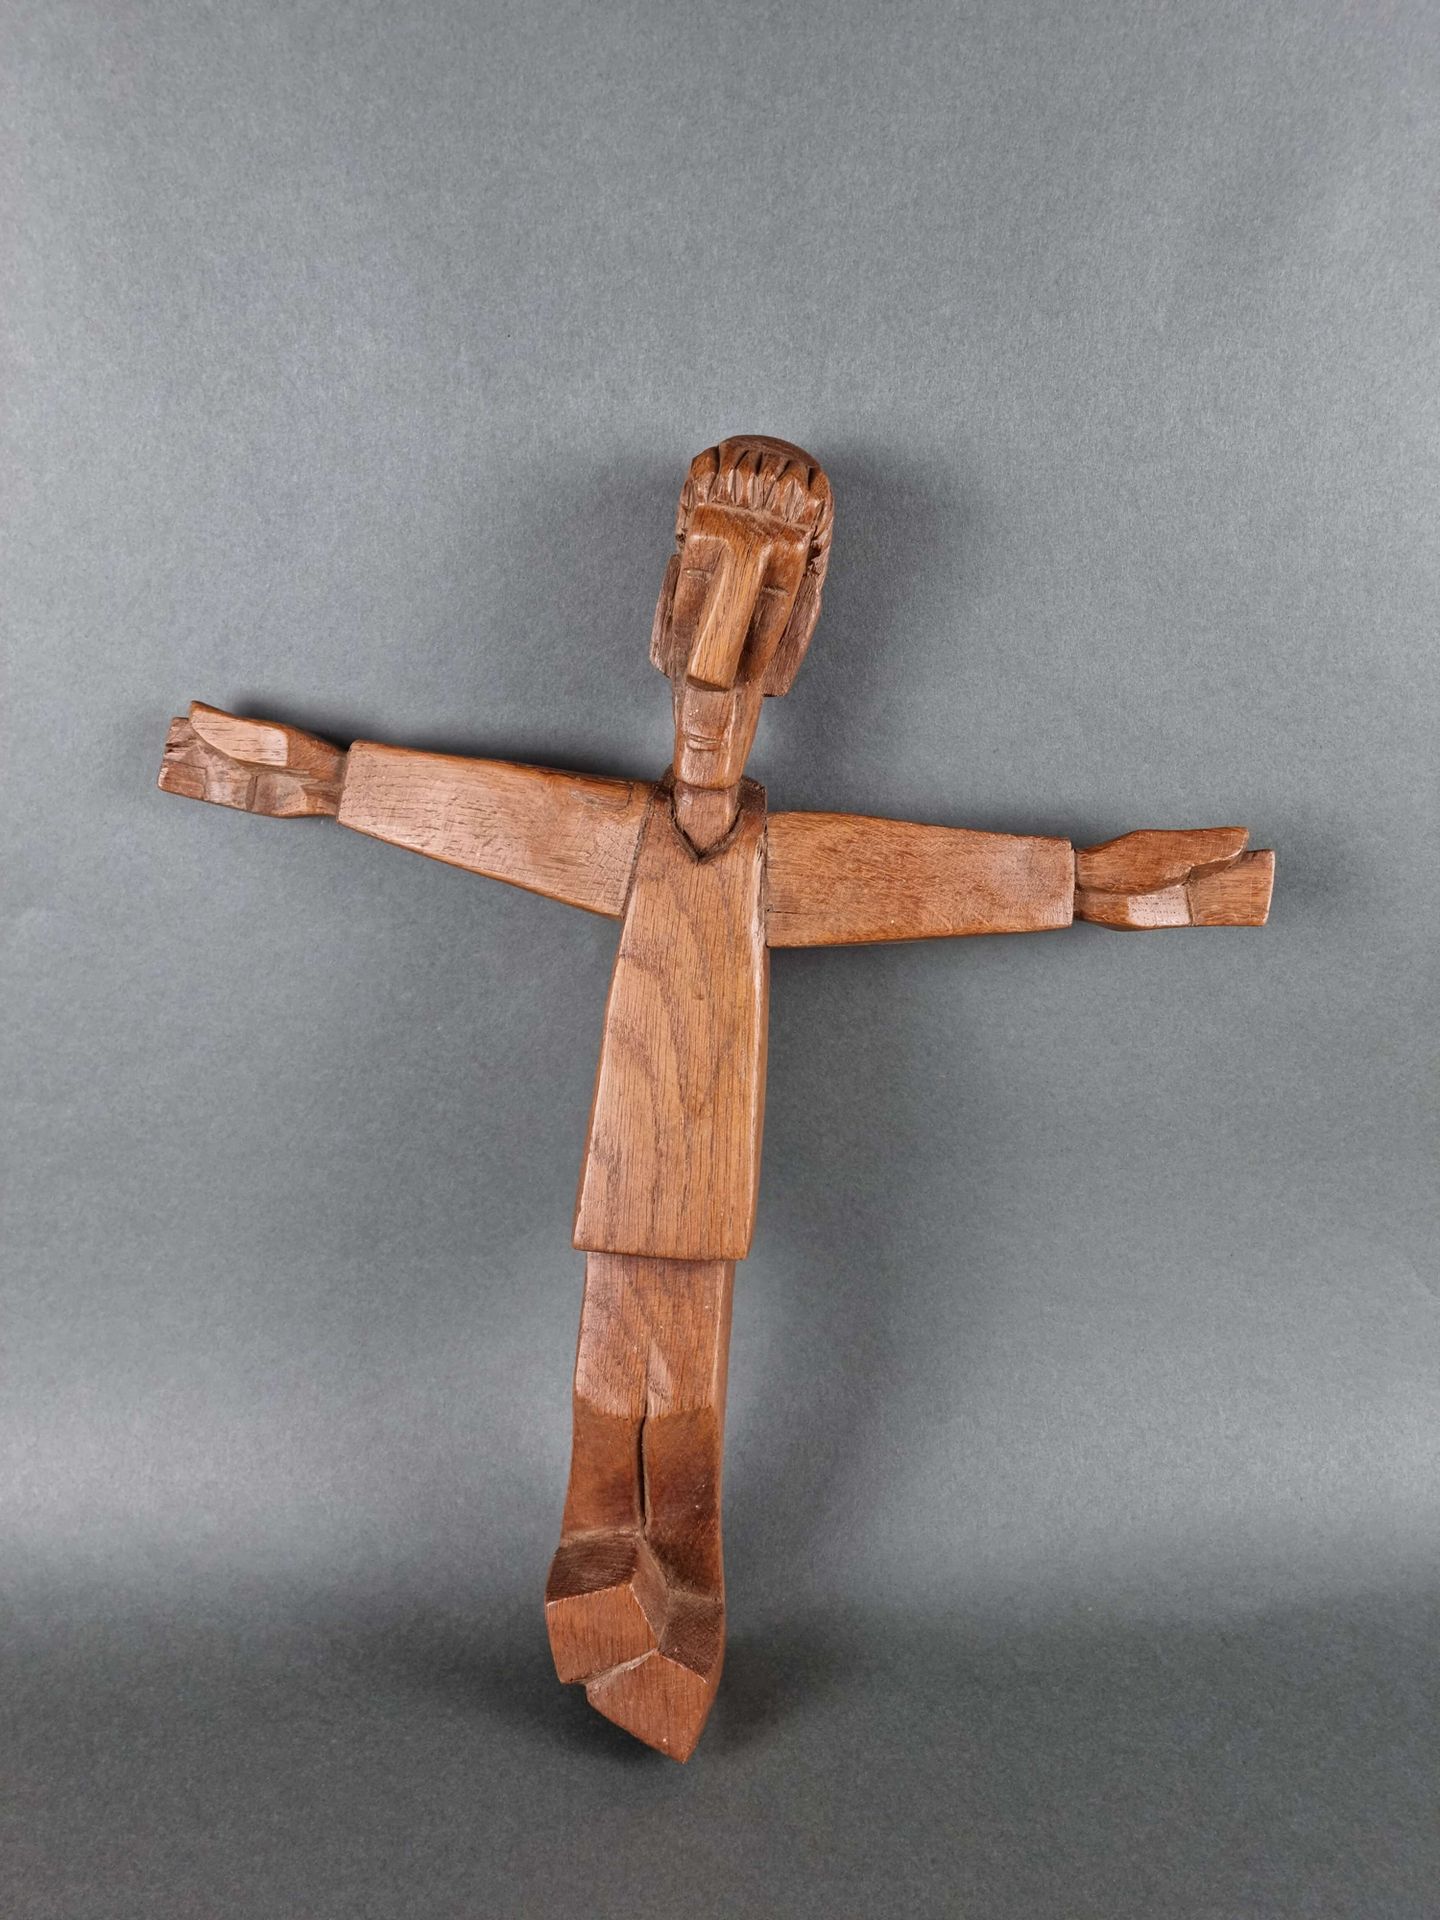 PLEYERS Jean (1914-1999) 署名为让-普利耶斯的木雕基督。高：43厘米，宽：40厘米